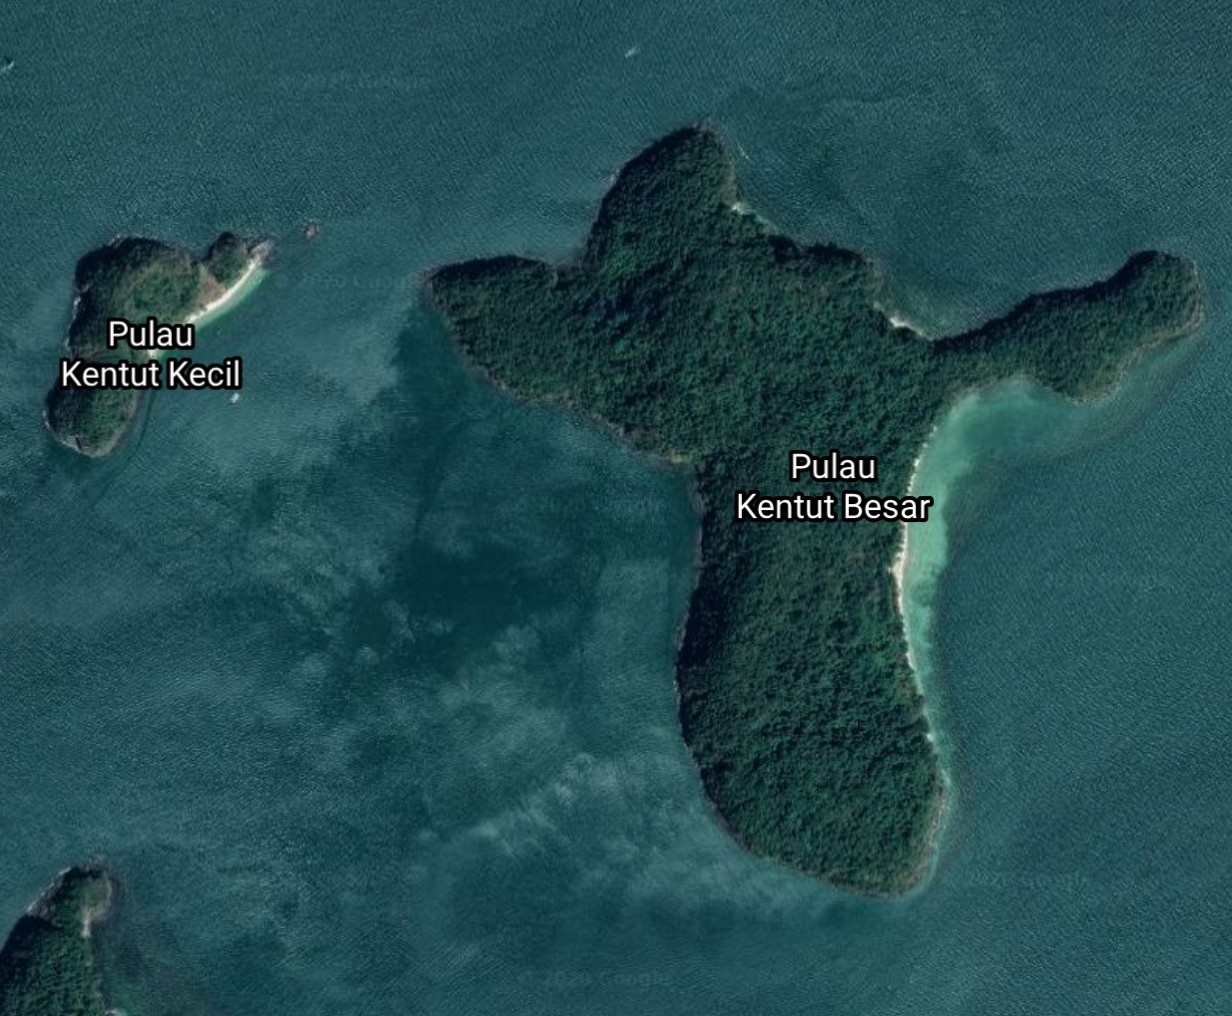 Pulau Kentut Besar and Pulau Kentut Kecil